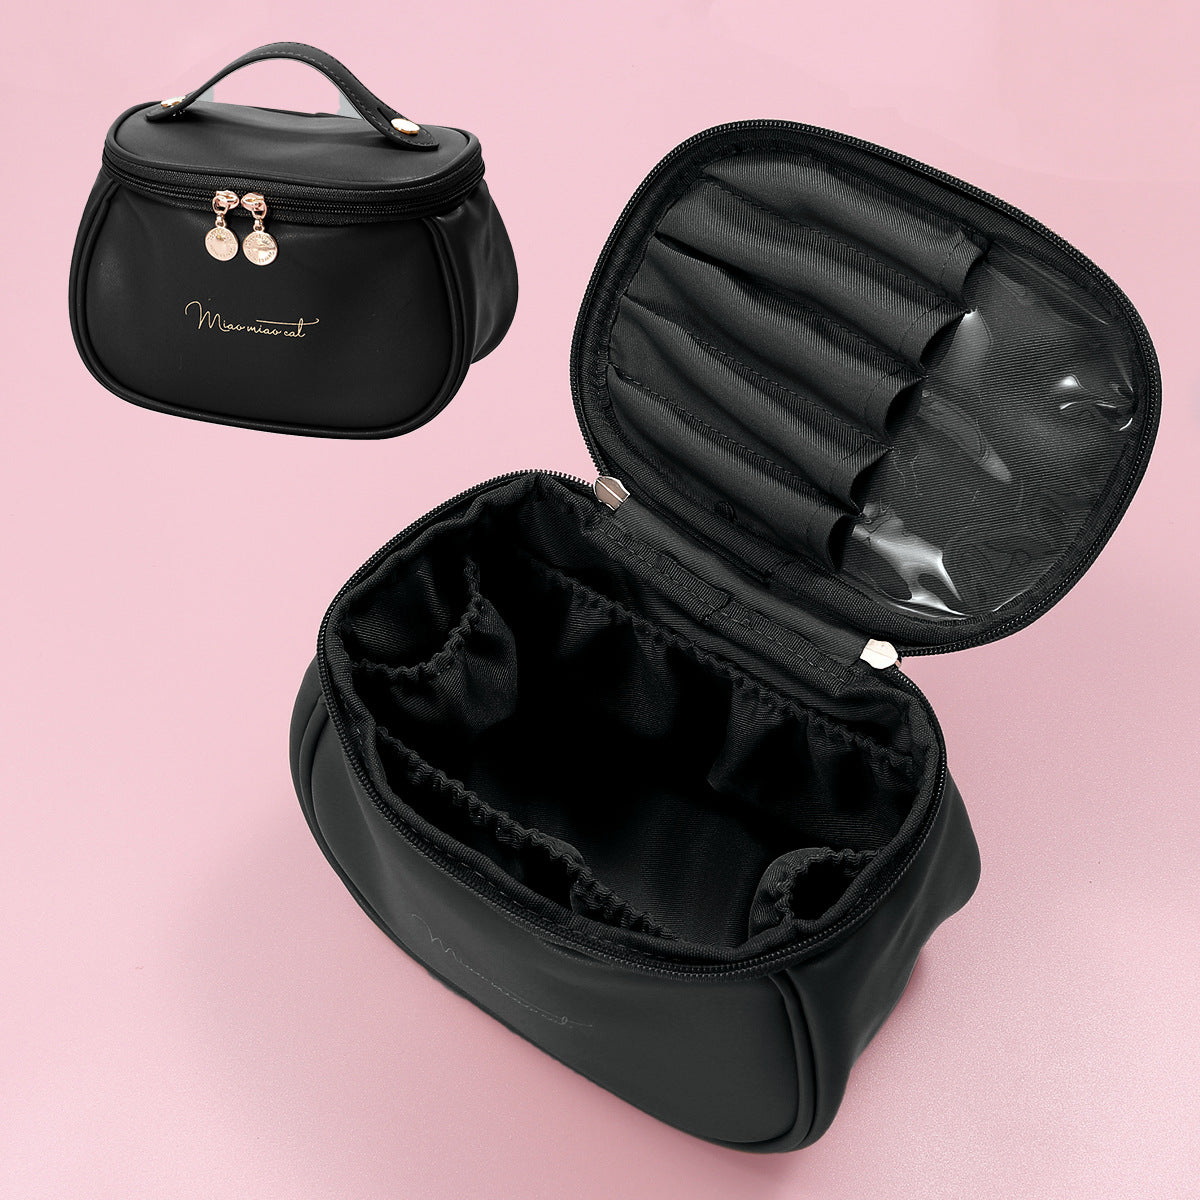 Makeup Large Capacity Portable Travel Toiletry Bag